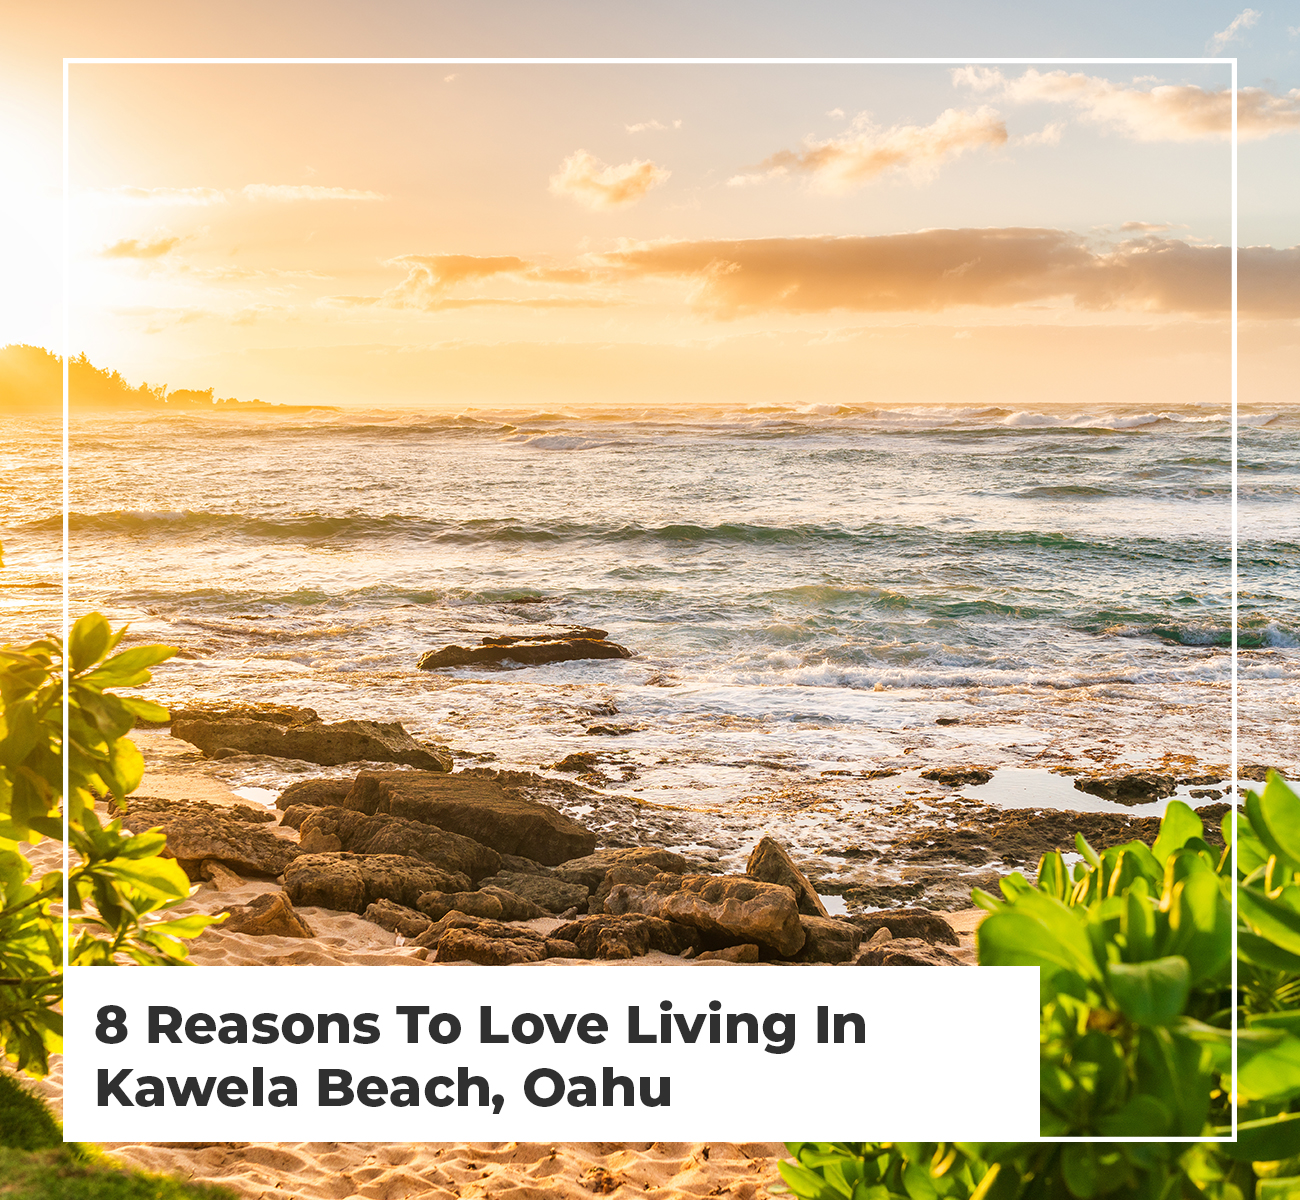 8 Reasons To Love Living In Kawela Bay, Oahu - Main Image